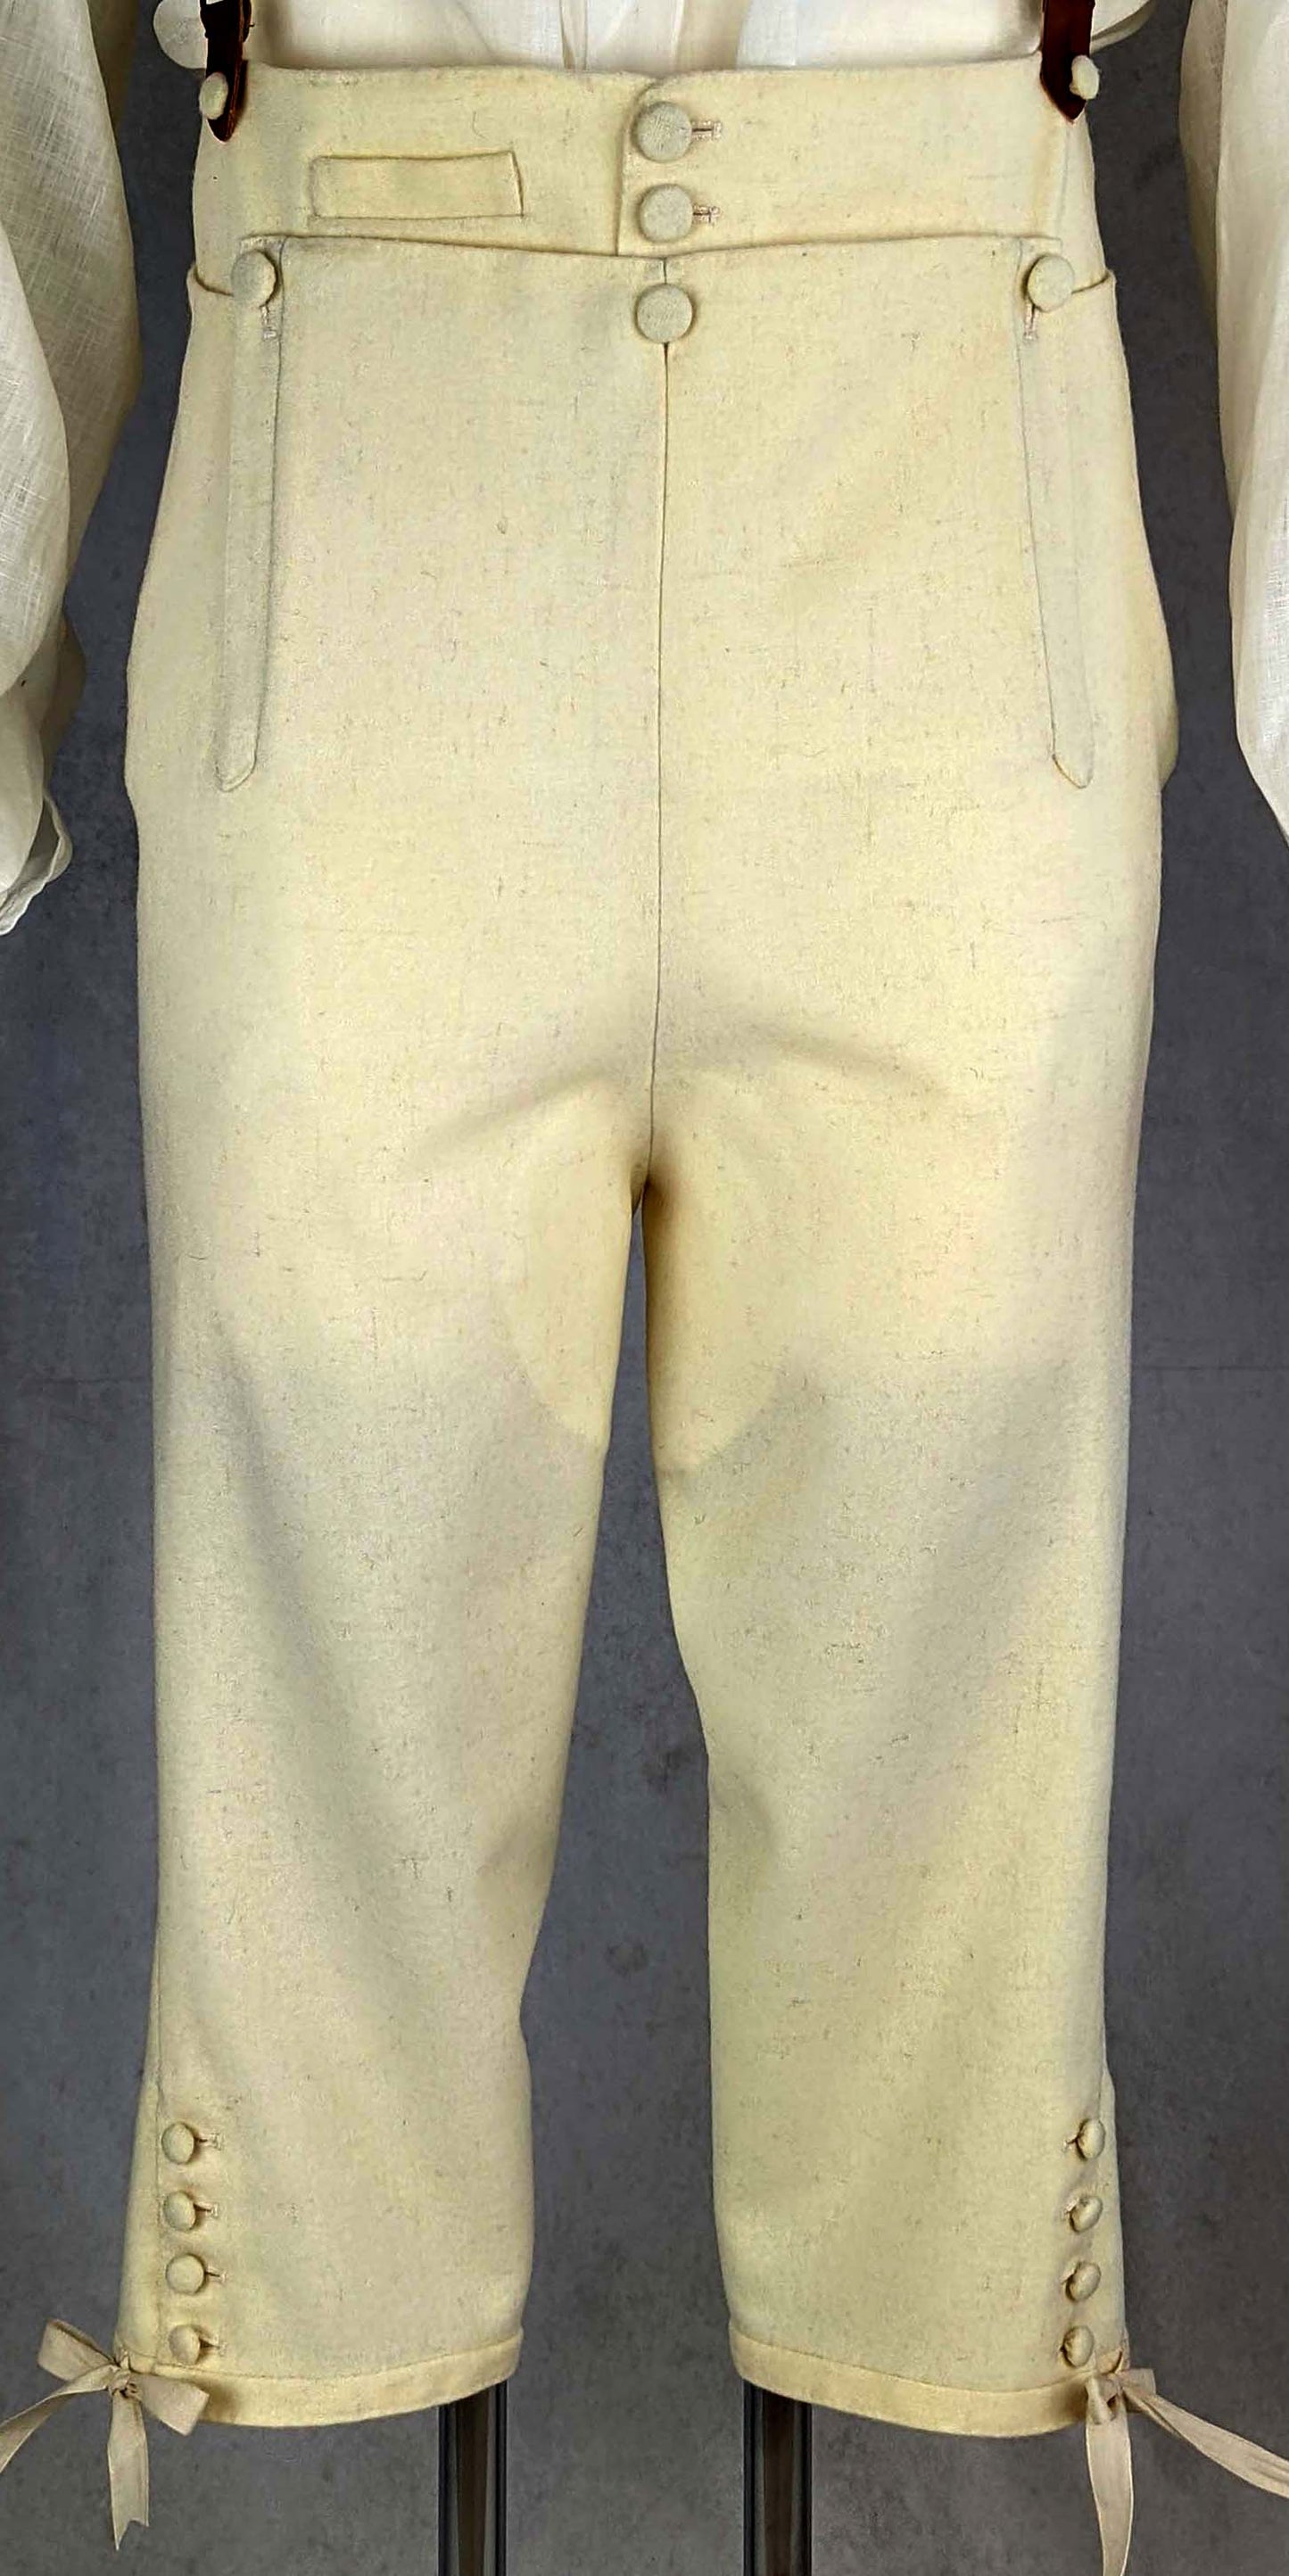 #0222 Empire Regency Mens Breeches around 1800 Sewing Pattern Size US 34-56 (EU 44-66) PDF Download